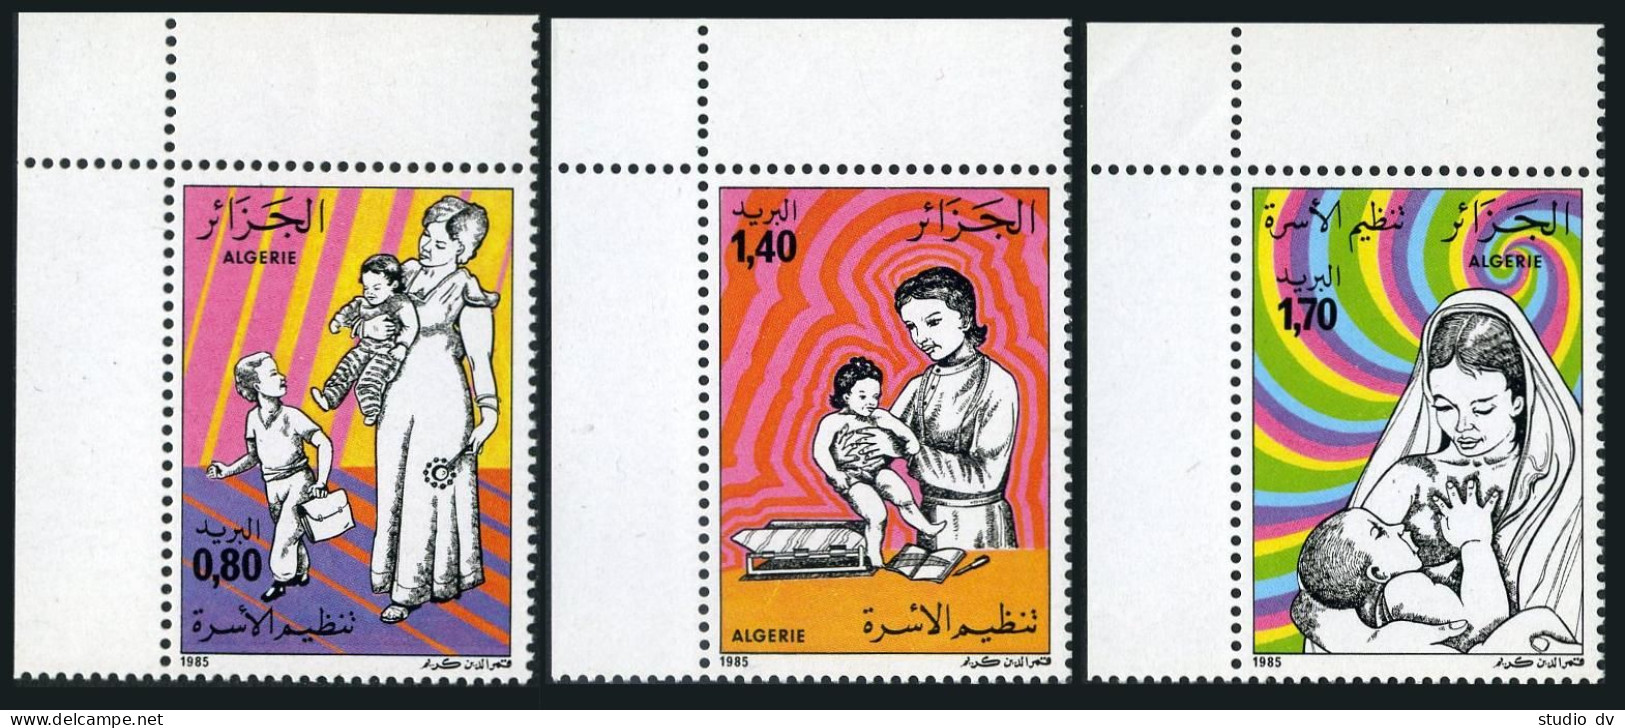 Algeria 789-791,MNH. Family Planing,1985. - Algerien (1962-...)